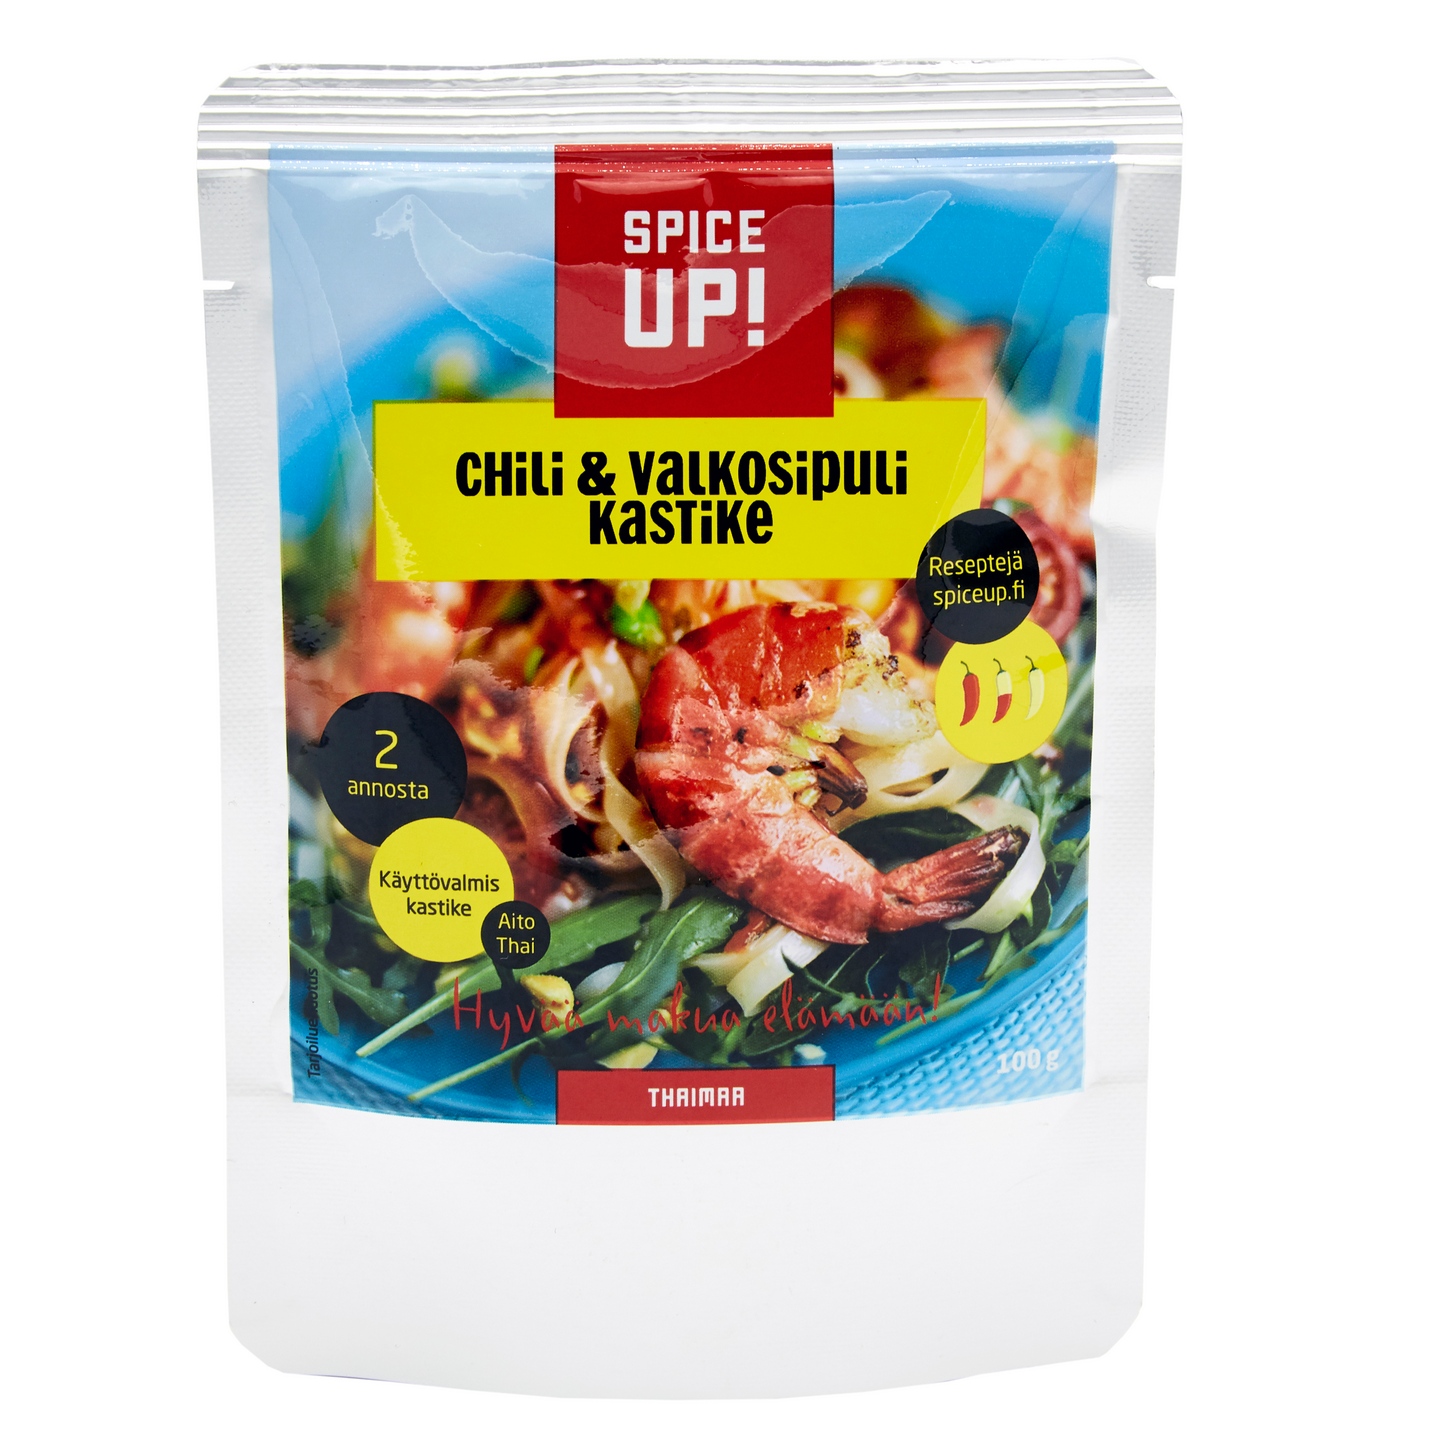 Spice Up! chili-valkosipulikastike keskitulinen 100g